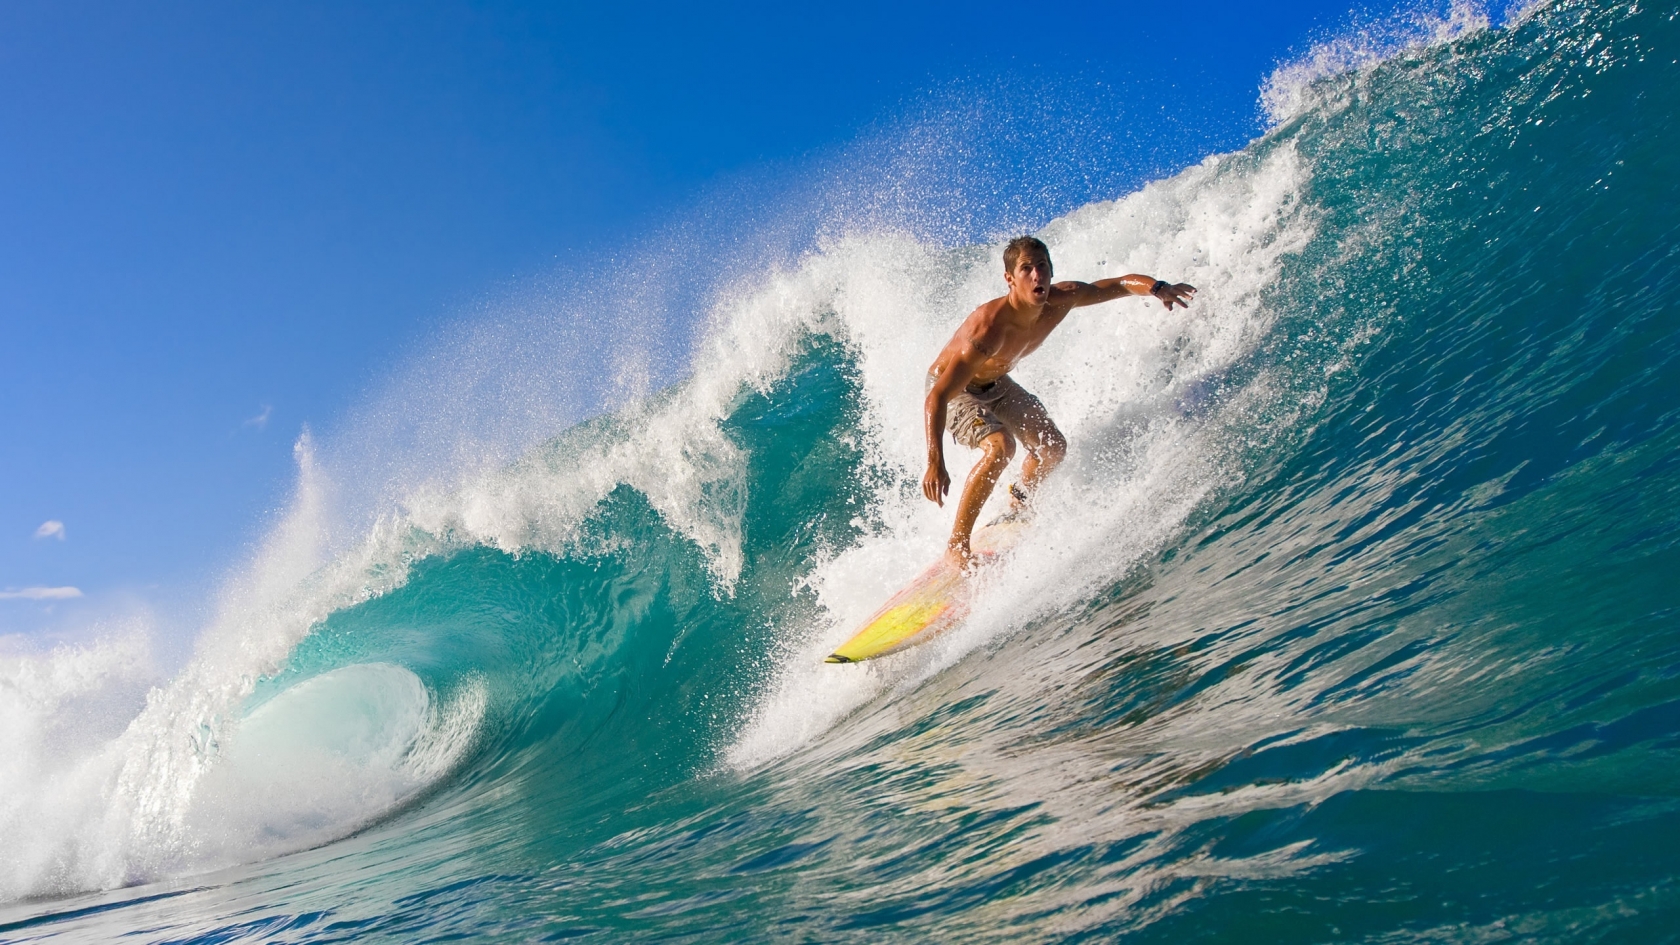 Summer Surf for 1680 x 945 HDTV resolution